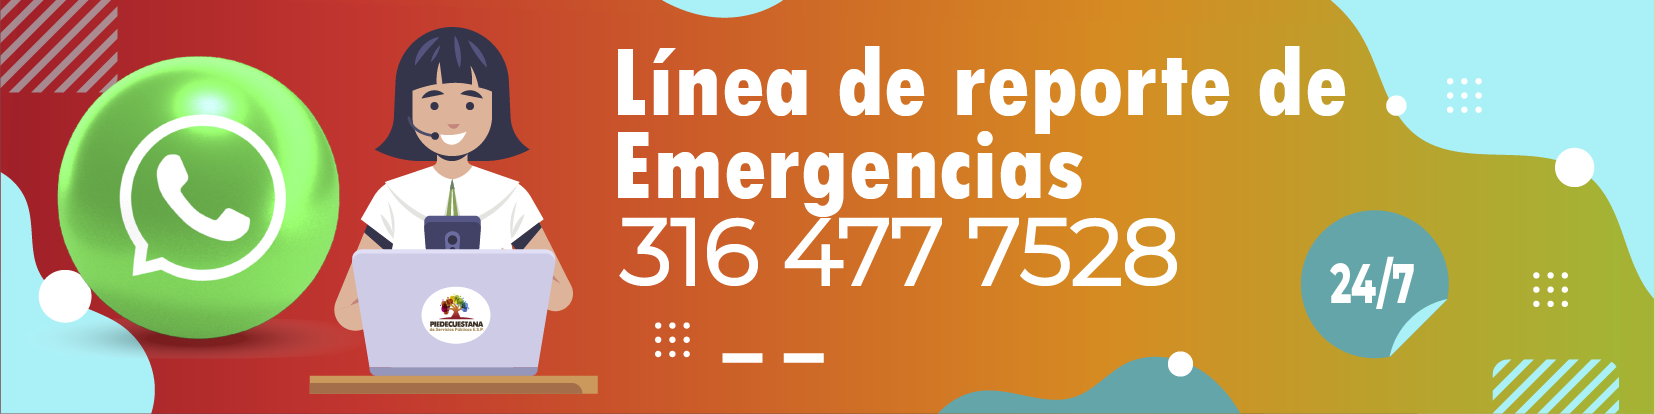 Banner correspondiente a Linea de reporte de emergencias